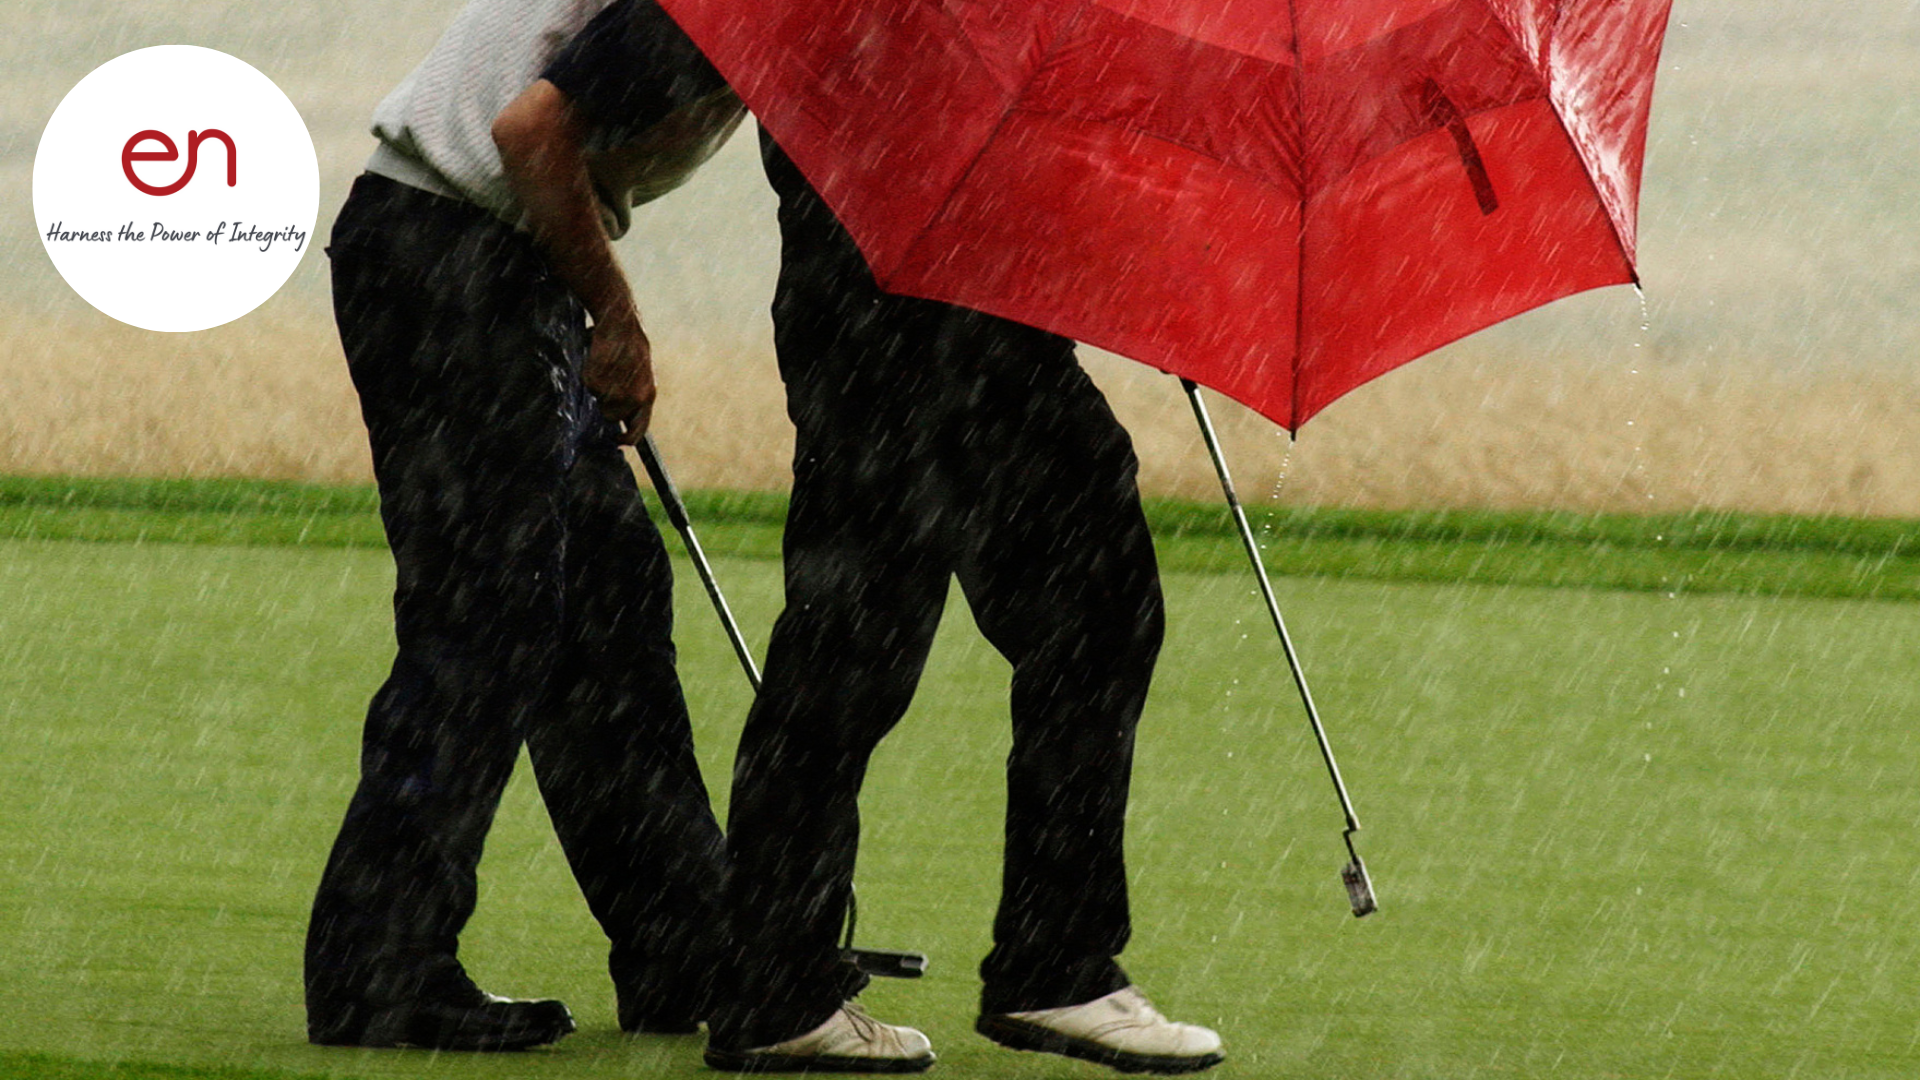 Golf in the rain